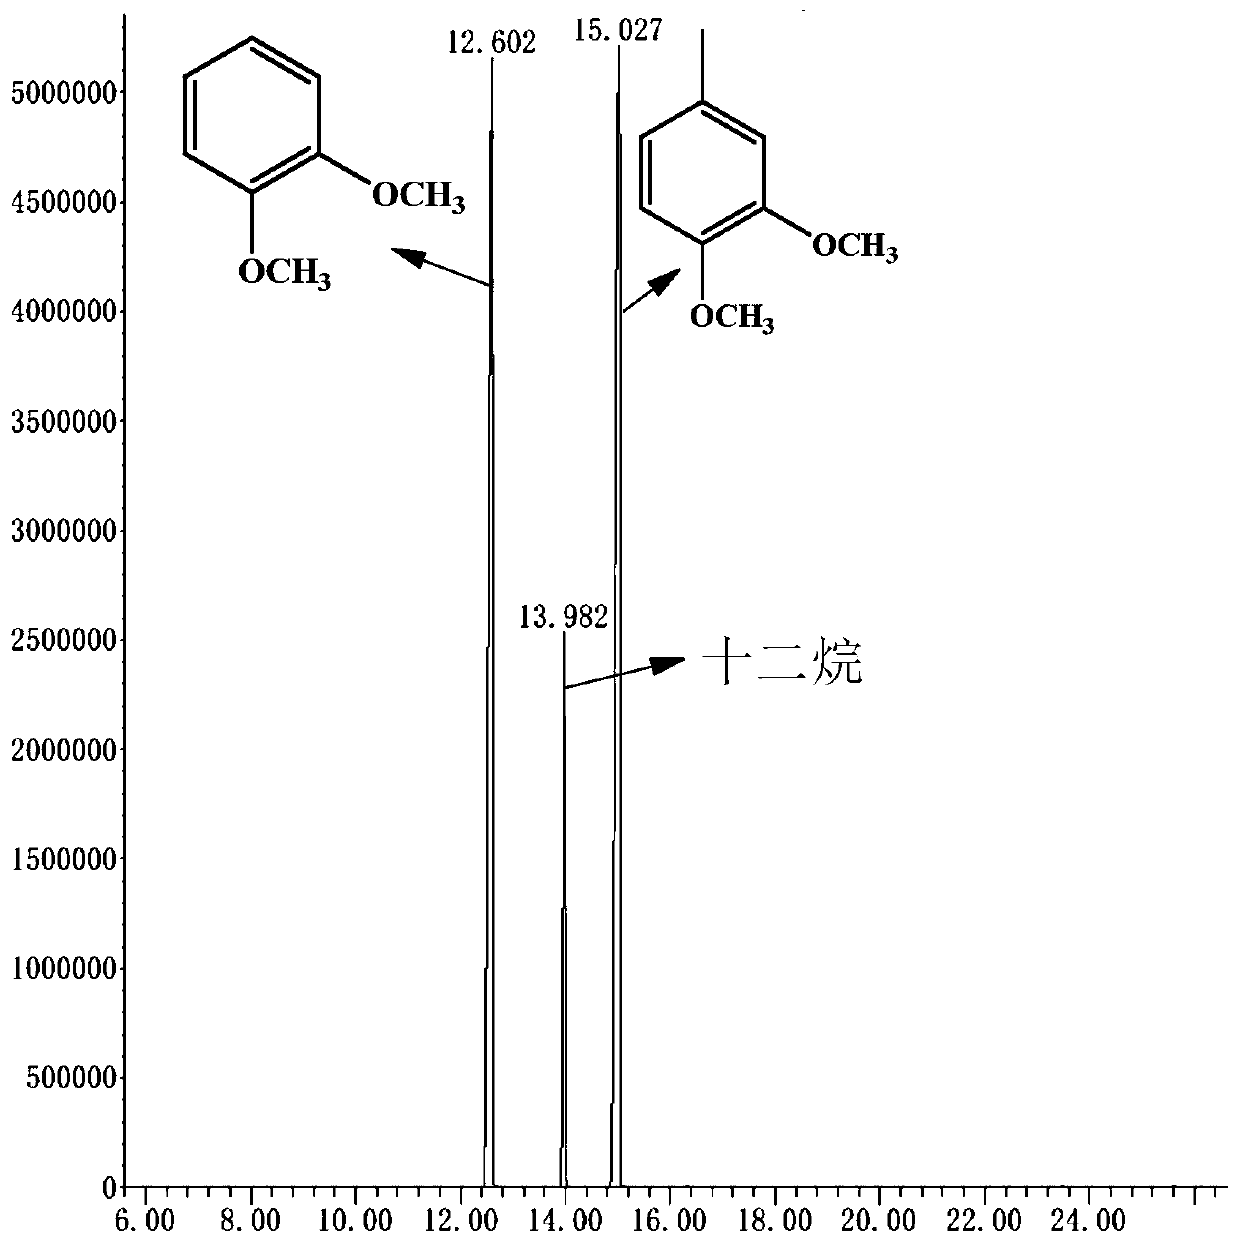 Method for catalyzing veratryl alcohol to convert into 3,4-dimethoxytoluene